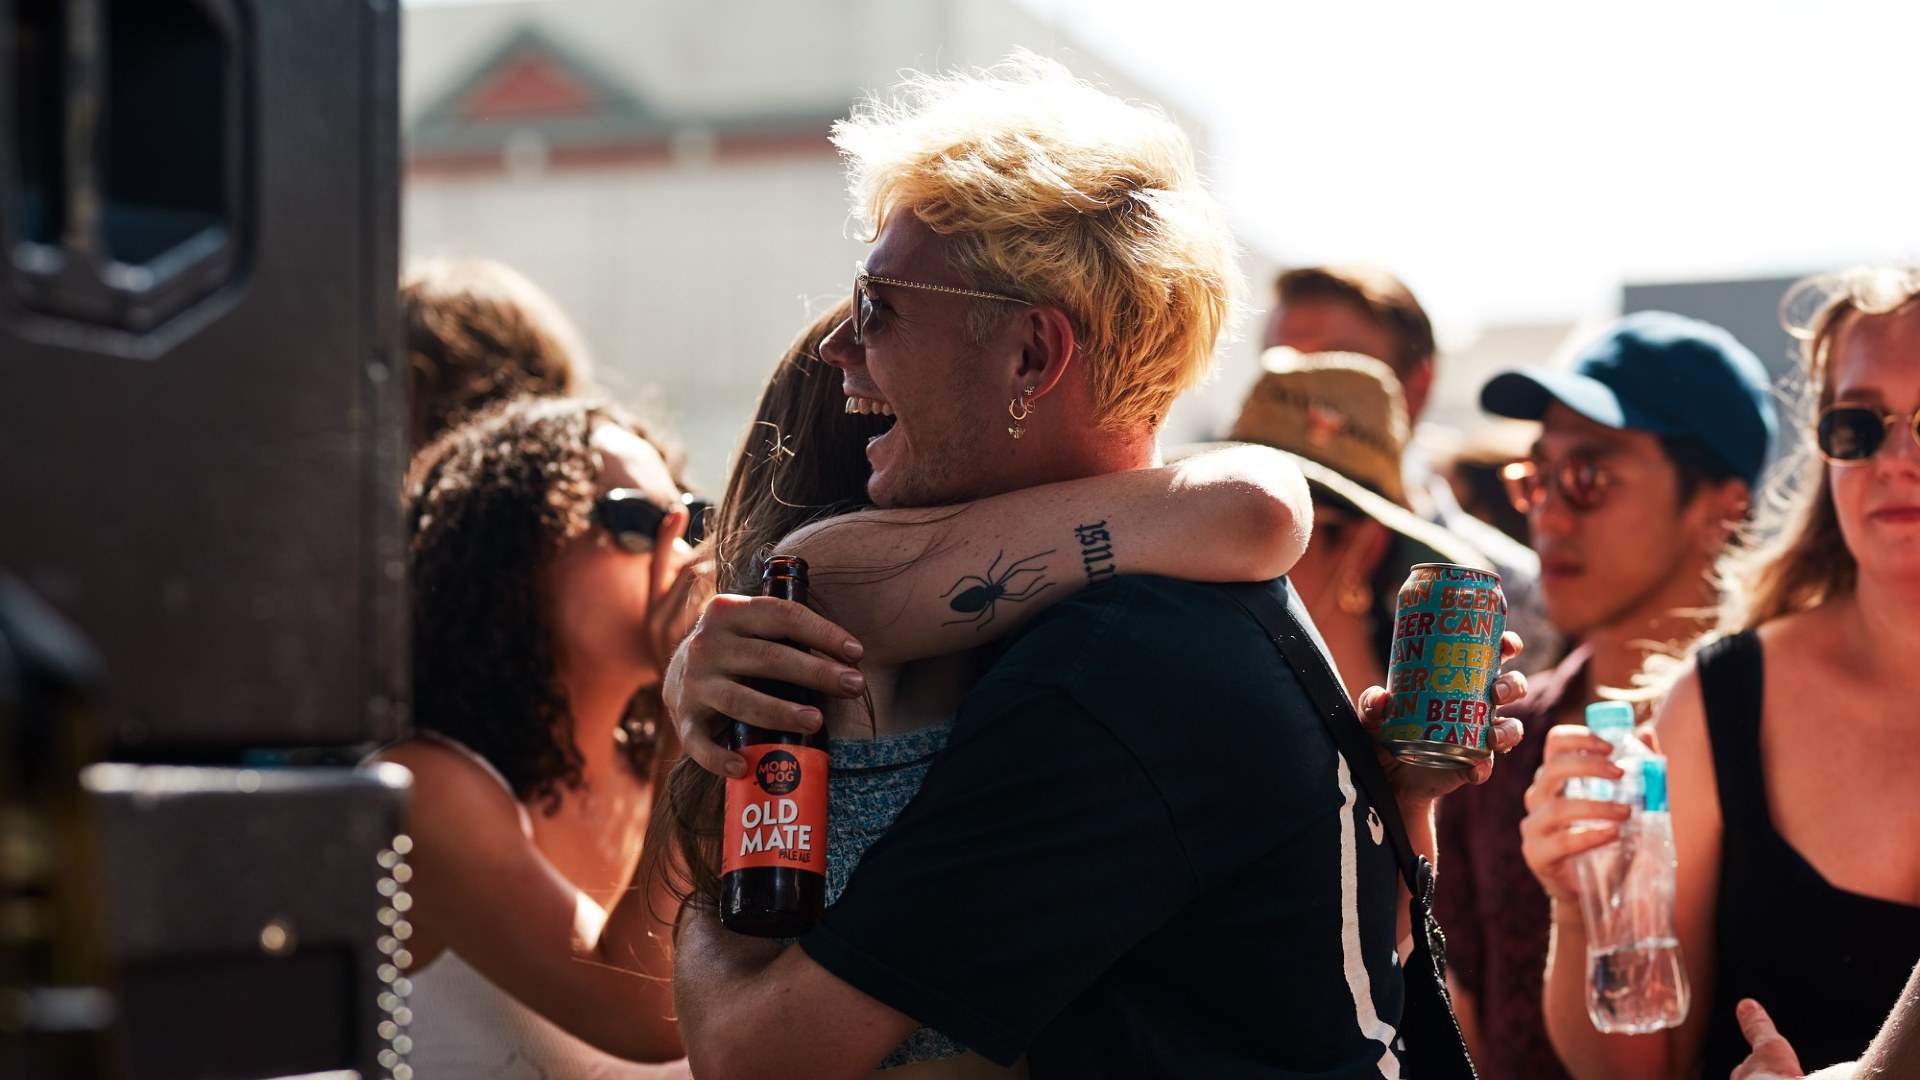 Two festivalgoers hugging